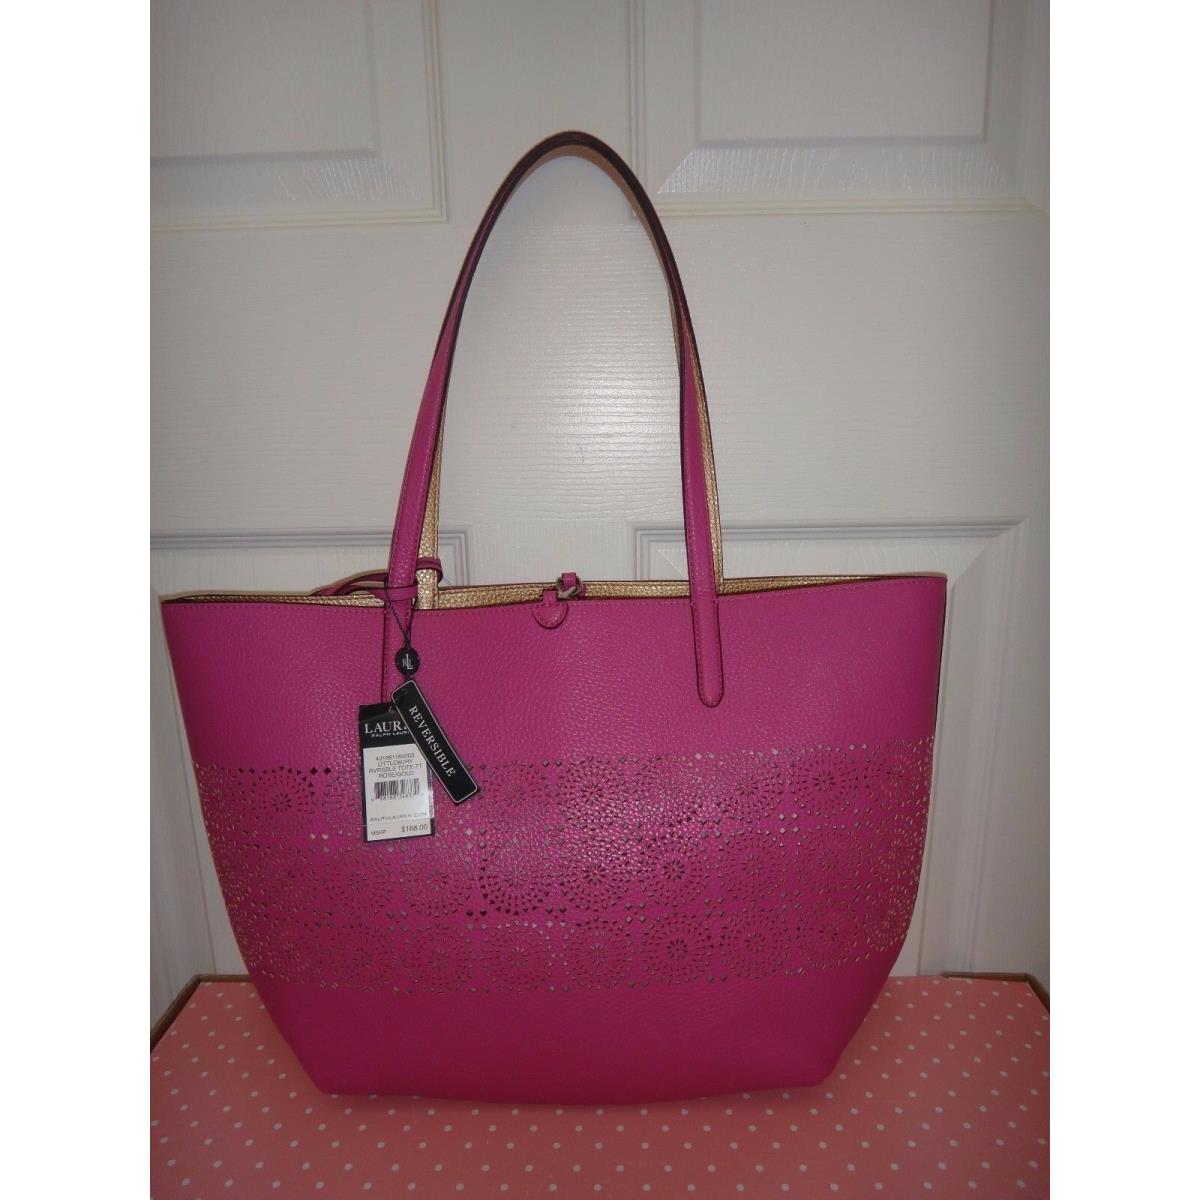 Ralph Lauren 2-PC Set Rll Littlebury Reversible Tote Bag Rose Pink Gold  Wristlet - Ralph Lauren bag - 888188348370 | Fash Brands